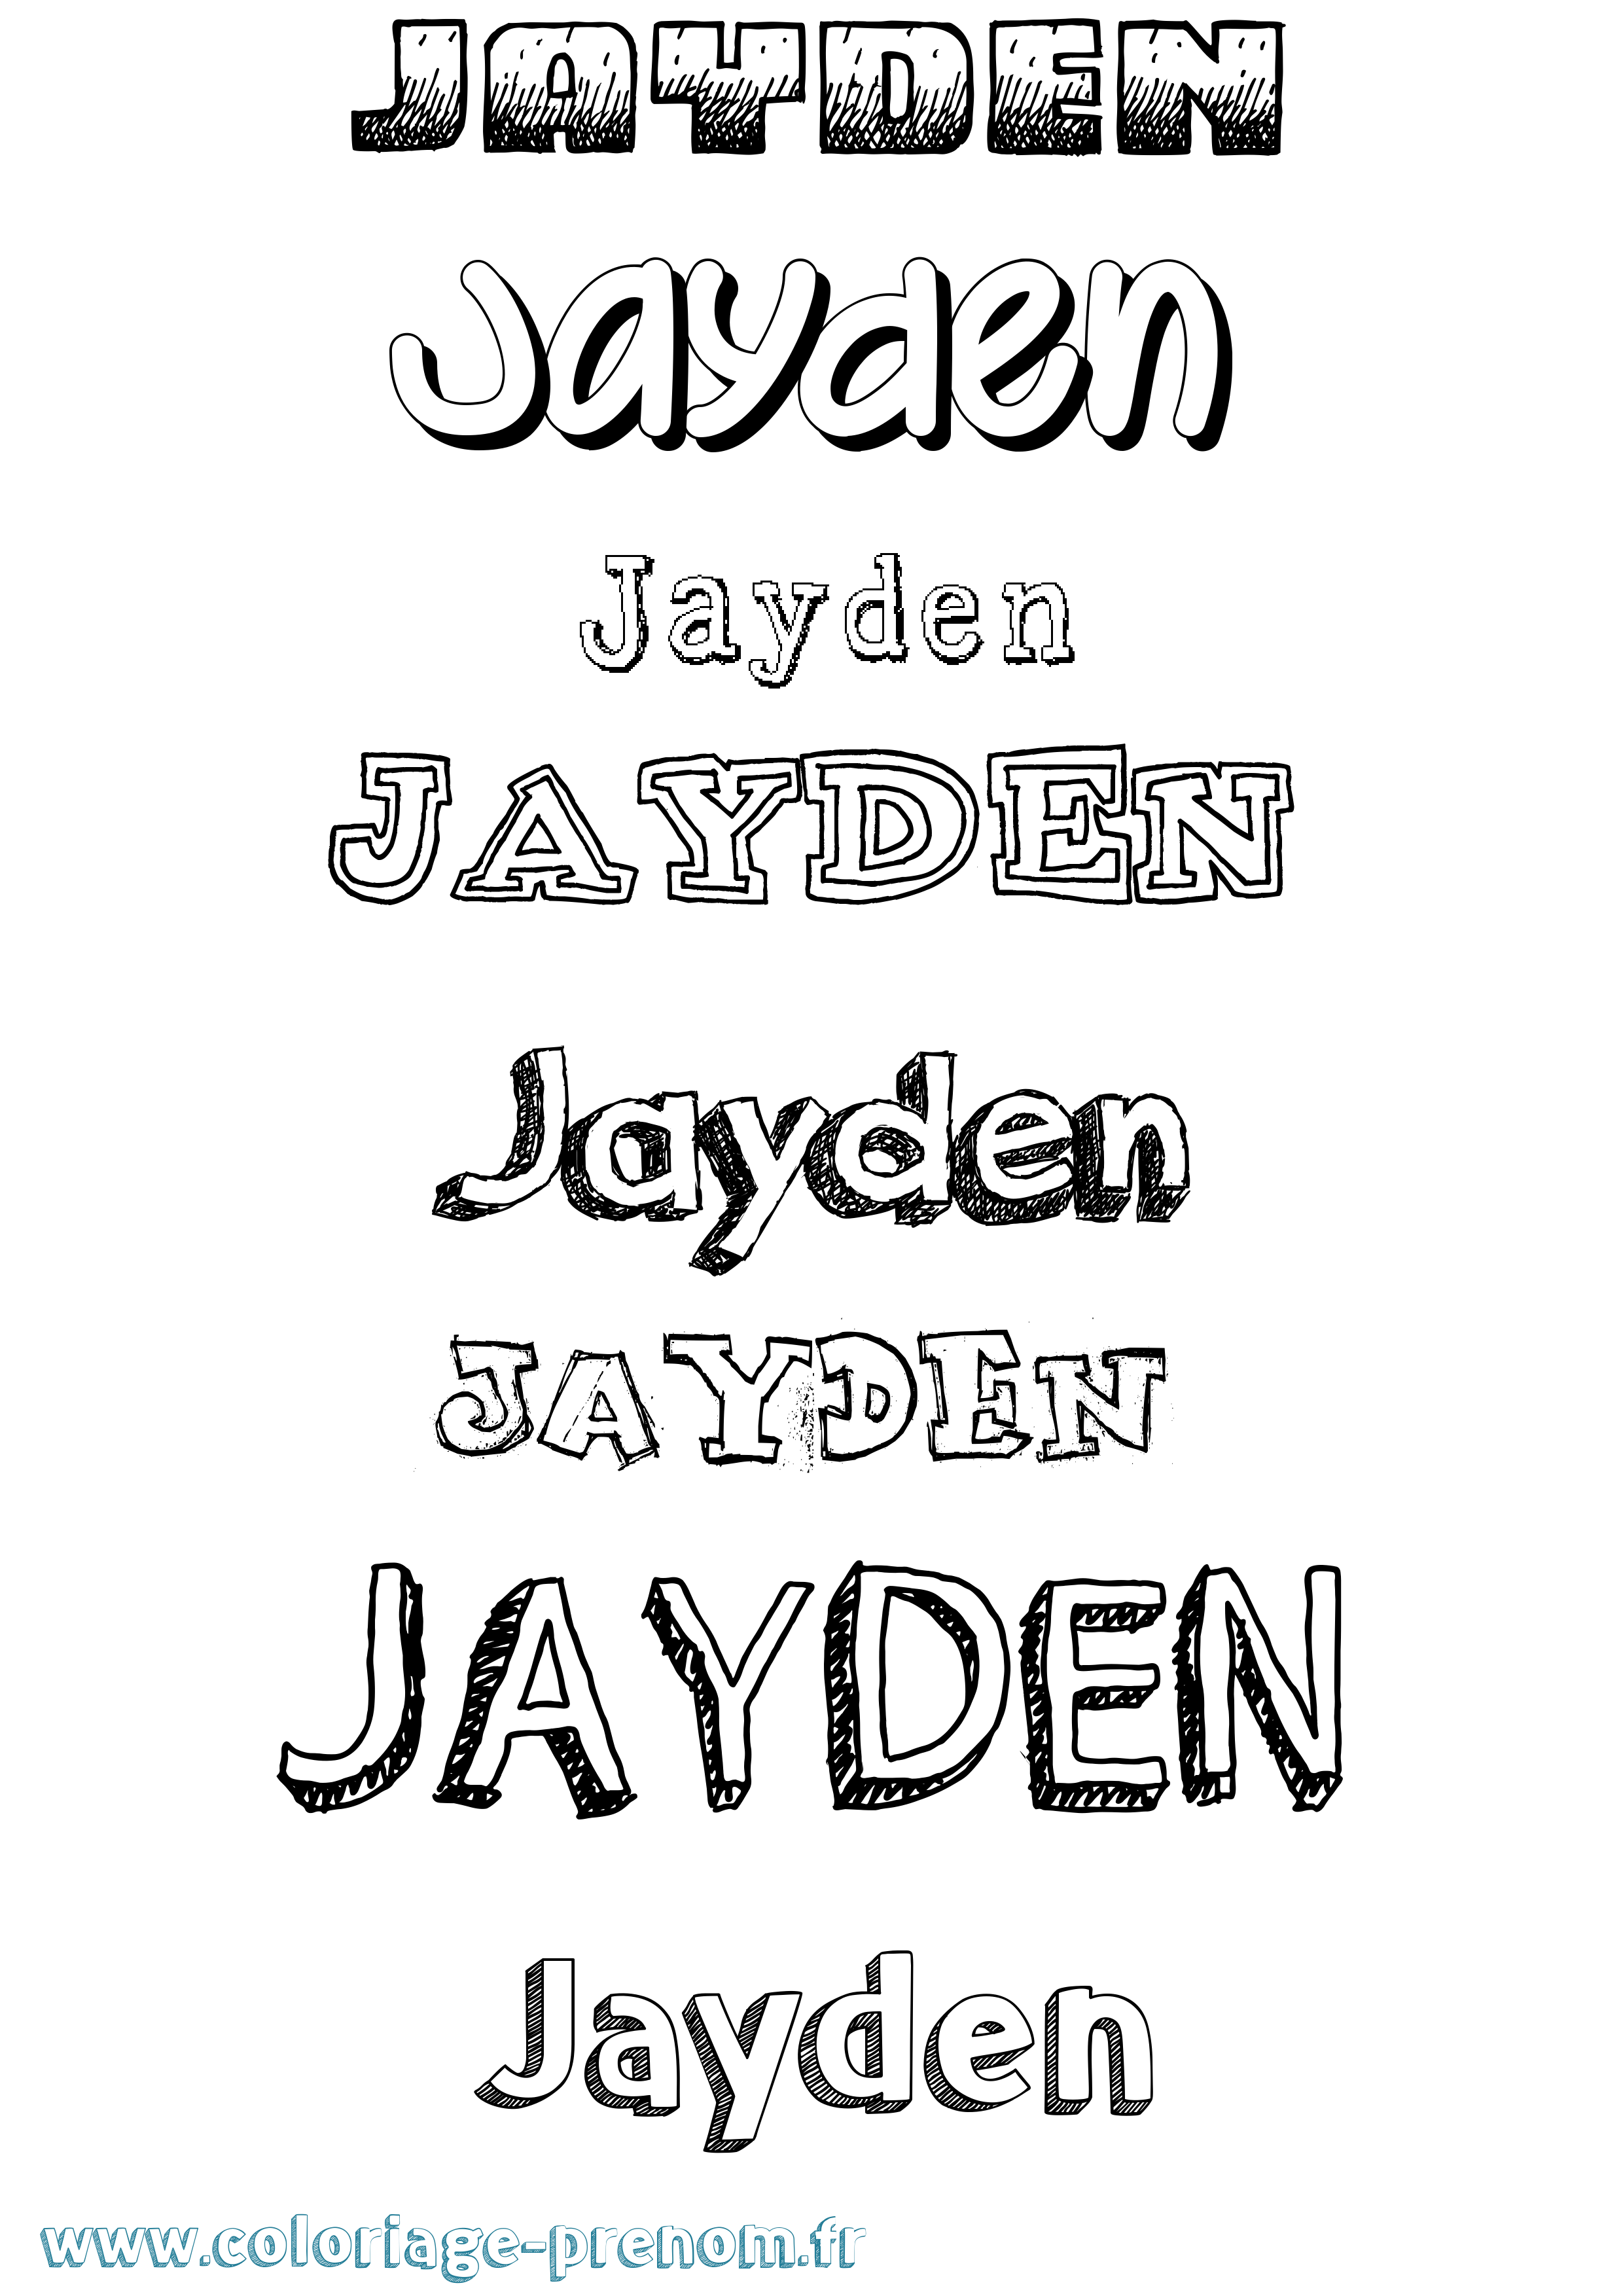 Coloriage prénom Jayden Dessiné